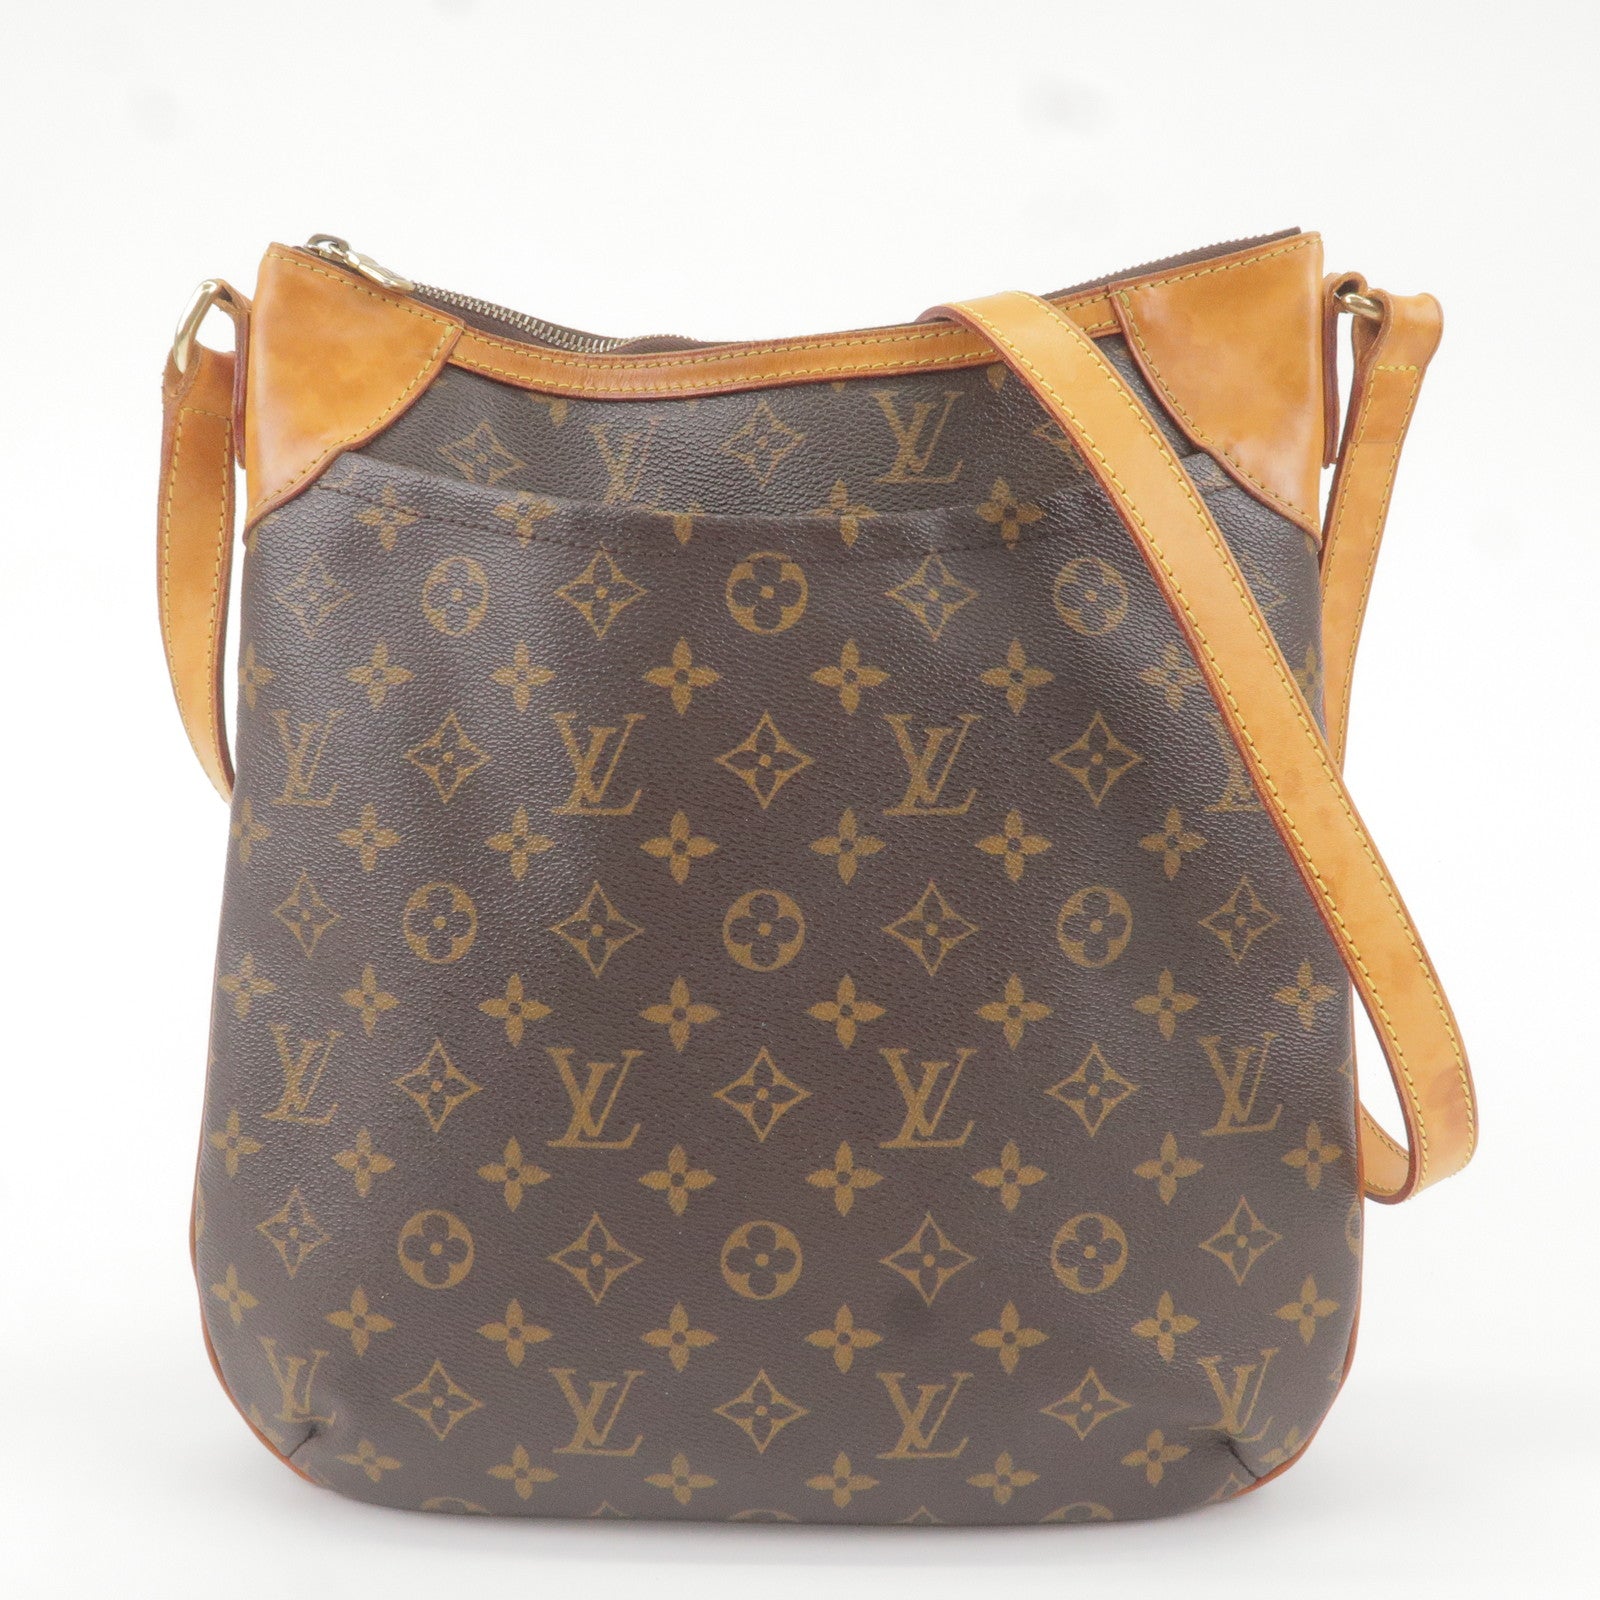 Bolso bandolera Louis Vuitton Trotteur en lona Monogram y cuero natural, Brown Louis Vuitton Monogram Keepall 60 Travel Bag